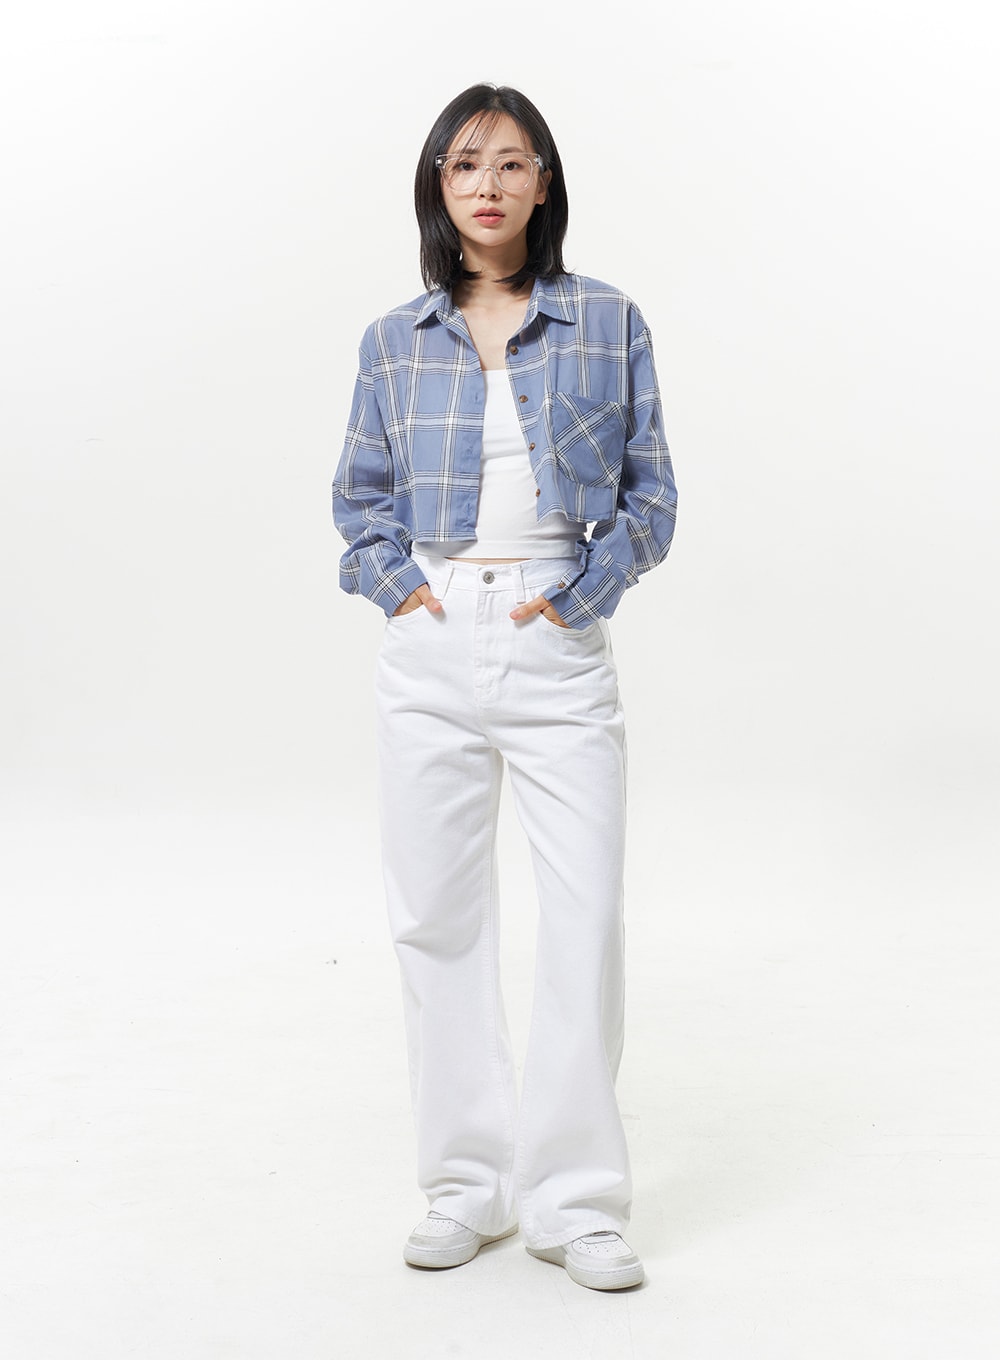 high-waist-cotton-pants-oy323